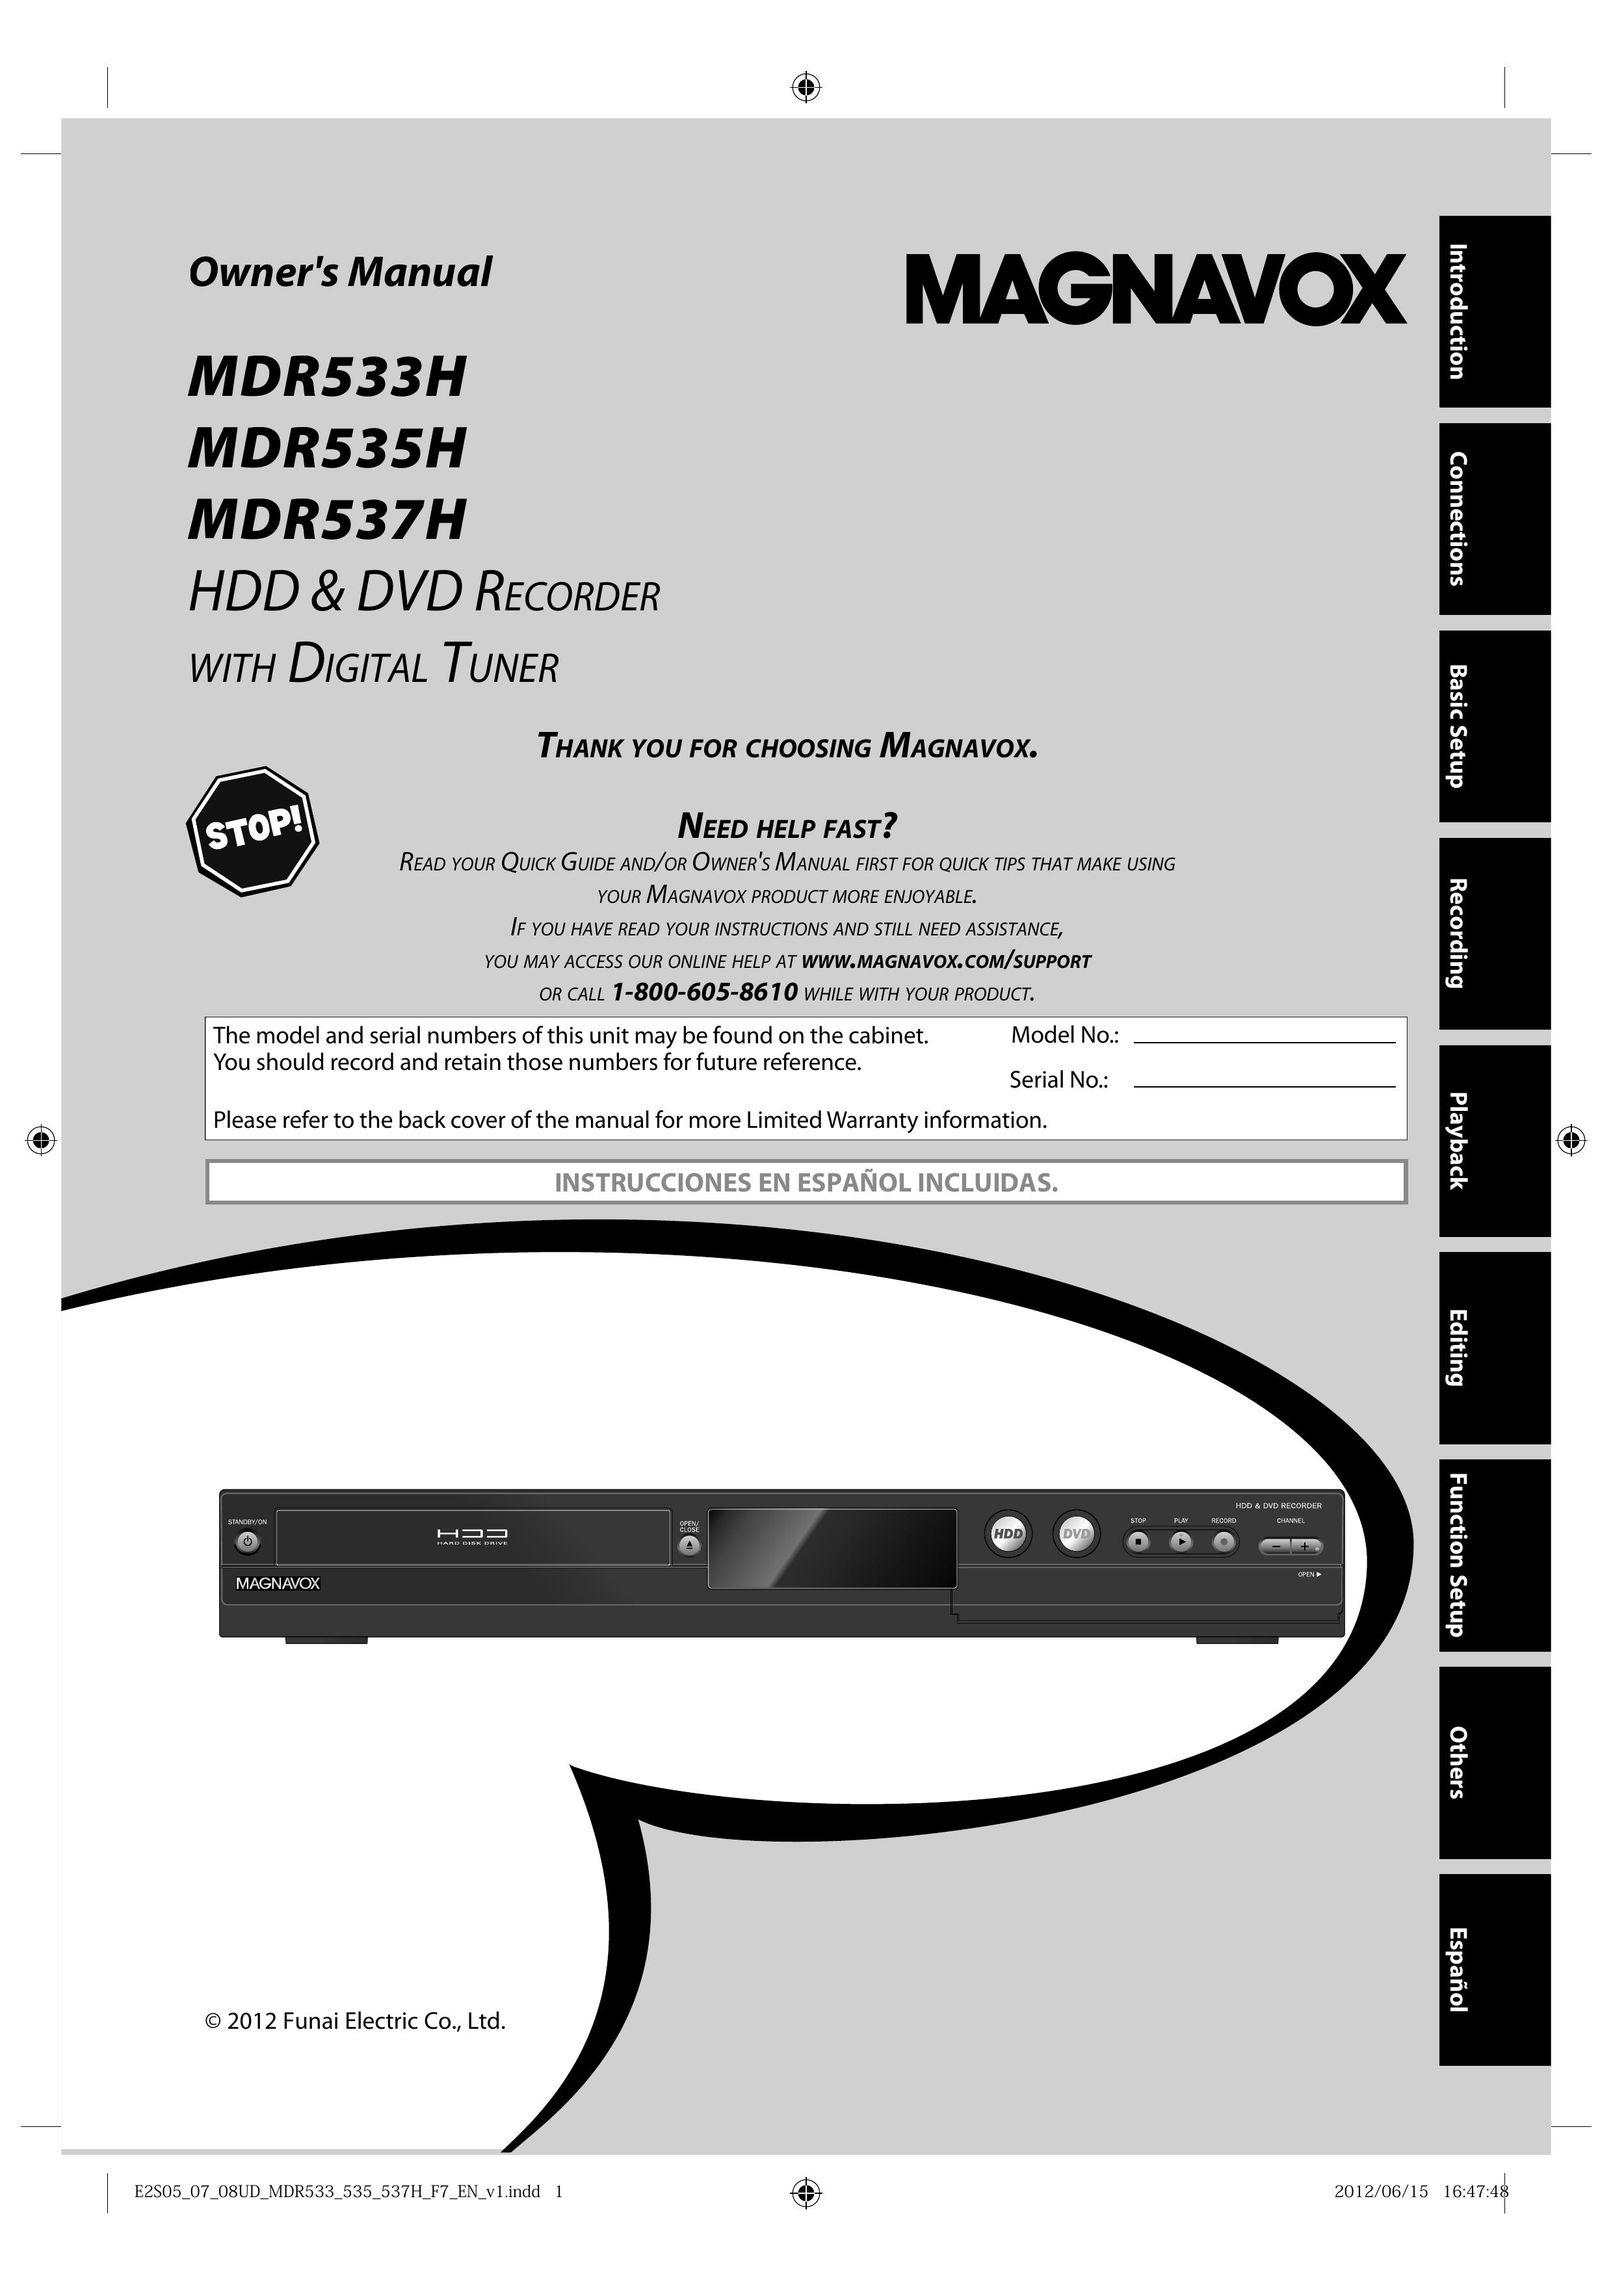 Magnavox MDR533H DVR User Manual